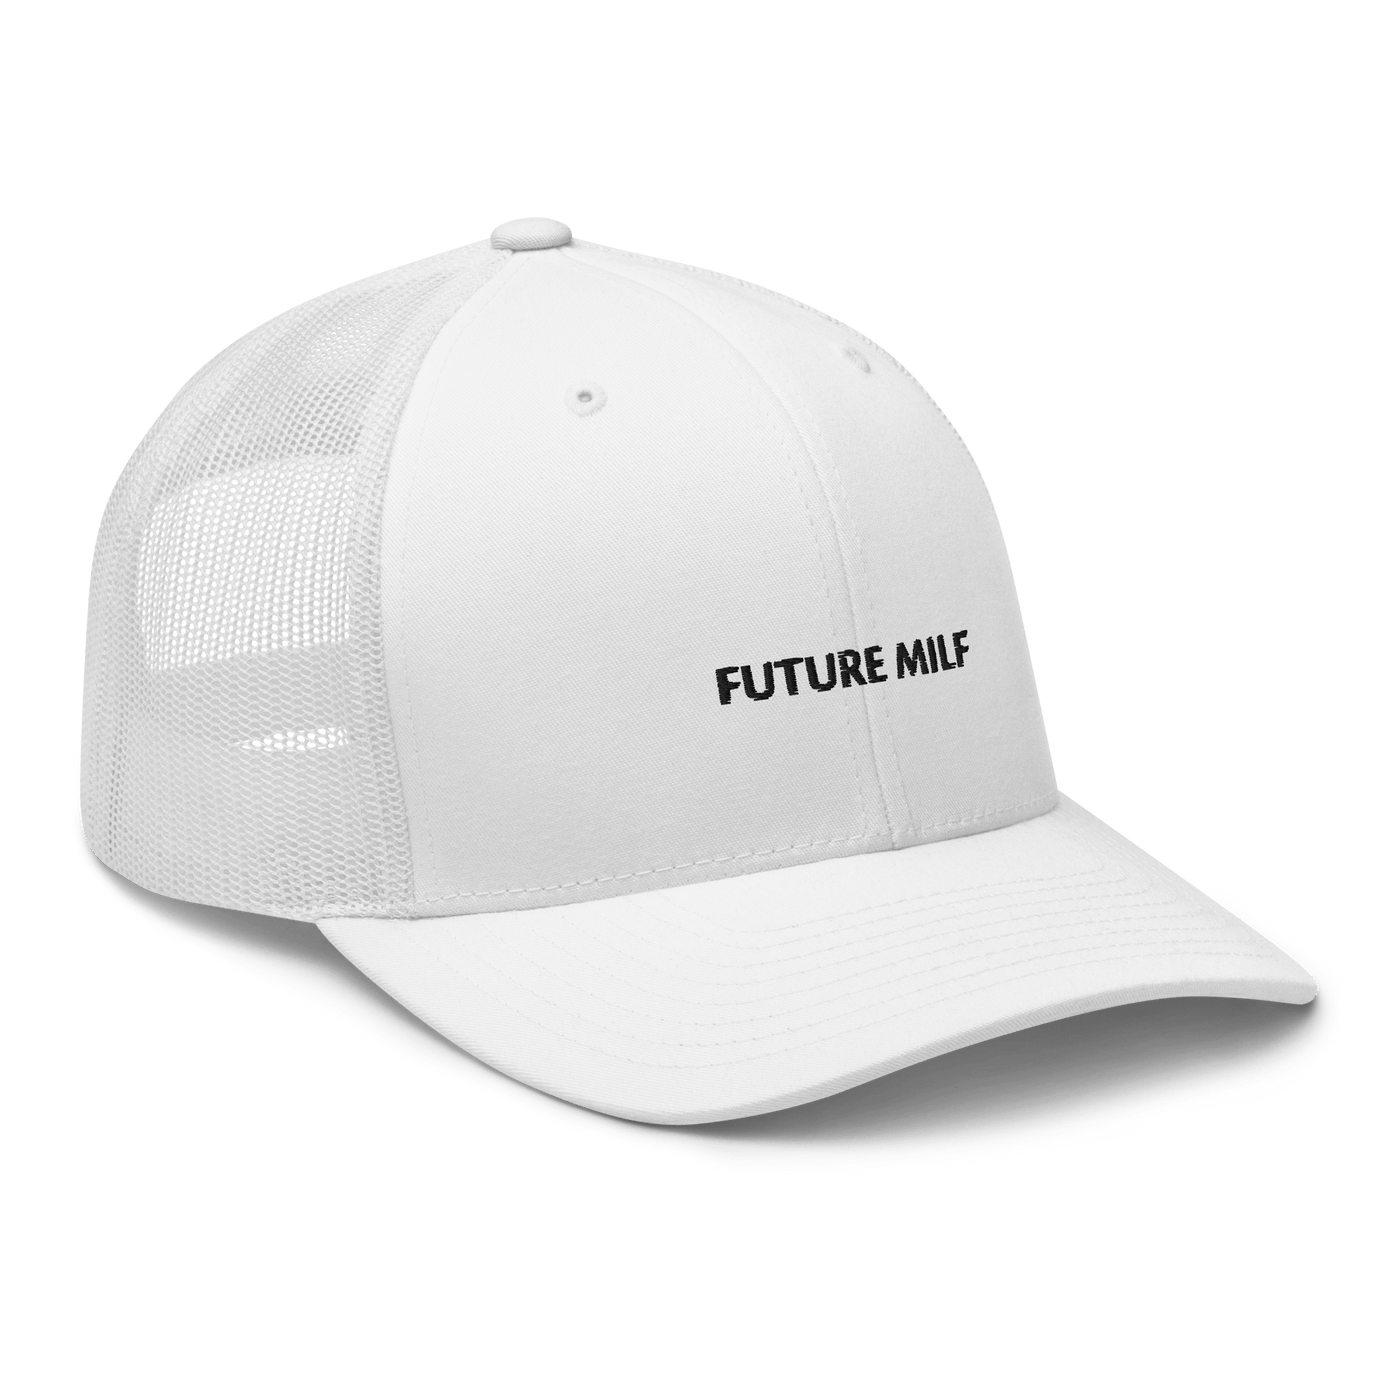 Future Milf Trucker Cap - White - - Just Another Cap Store